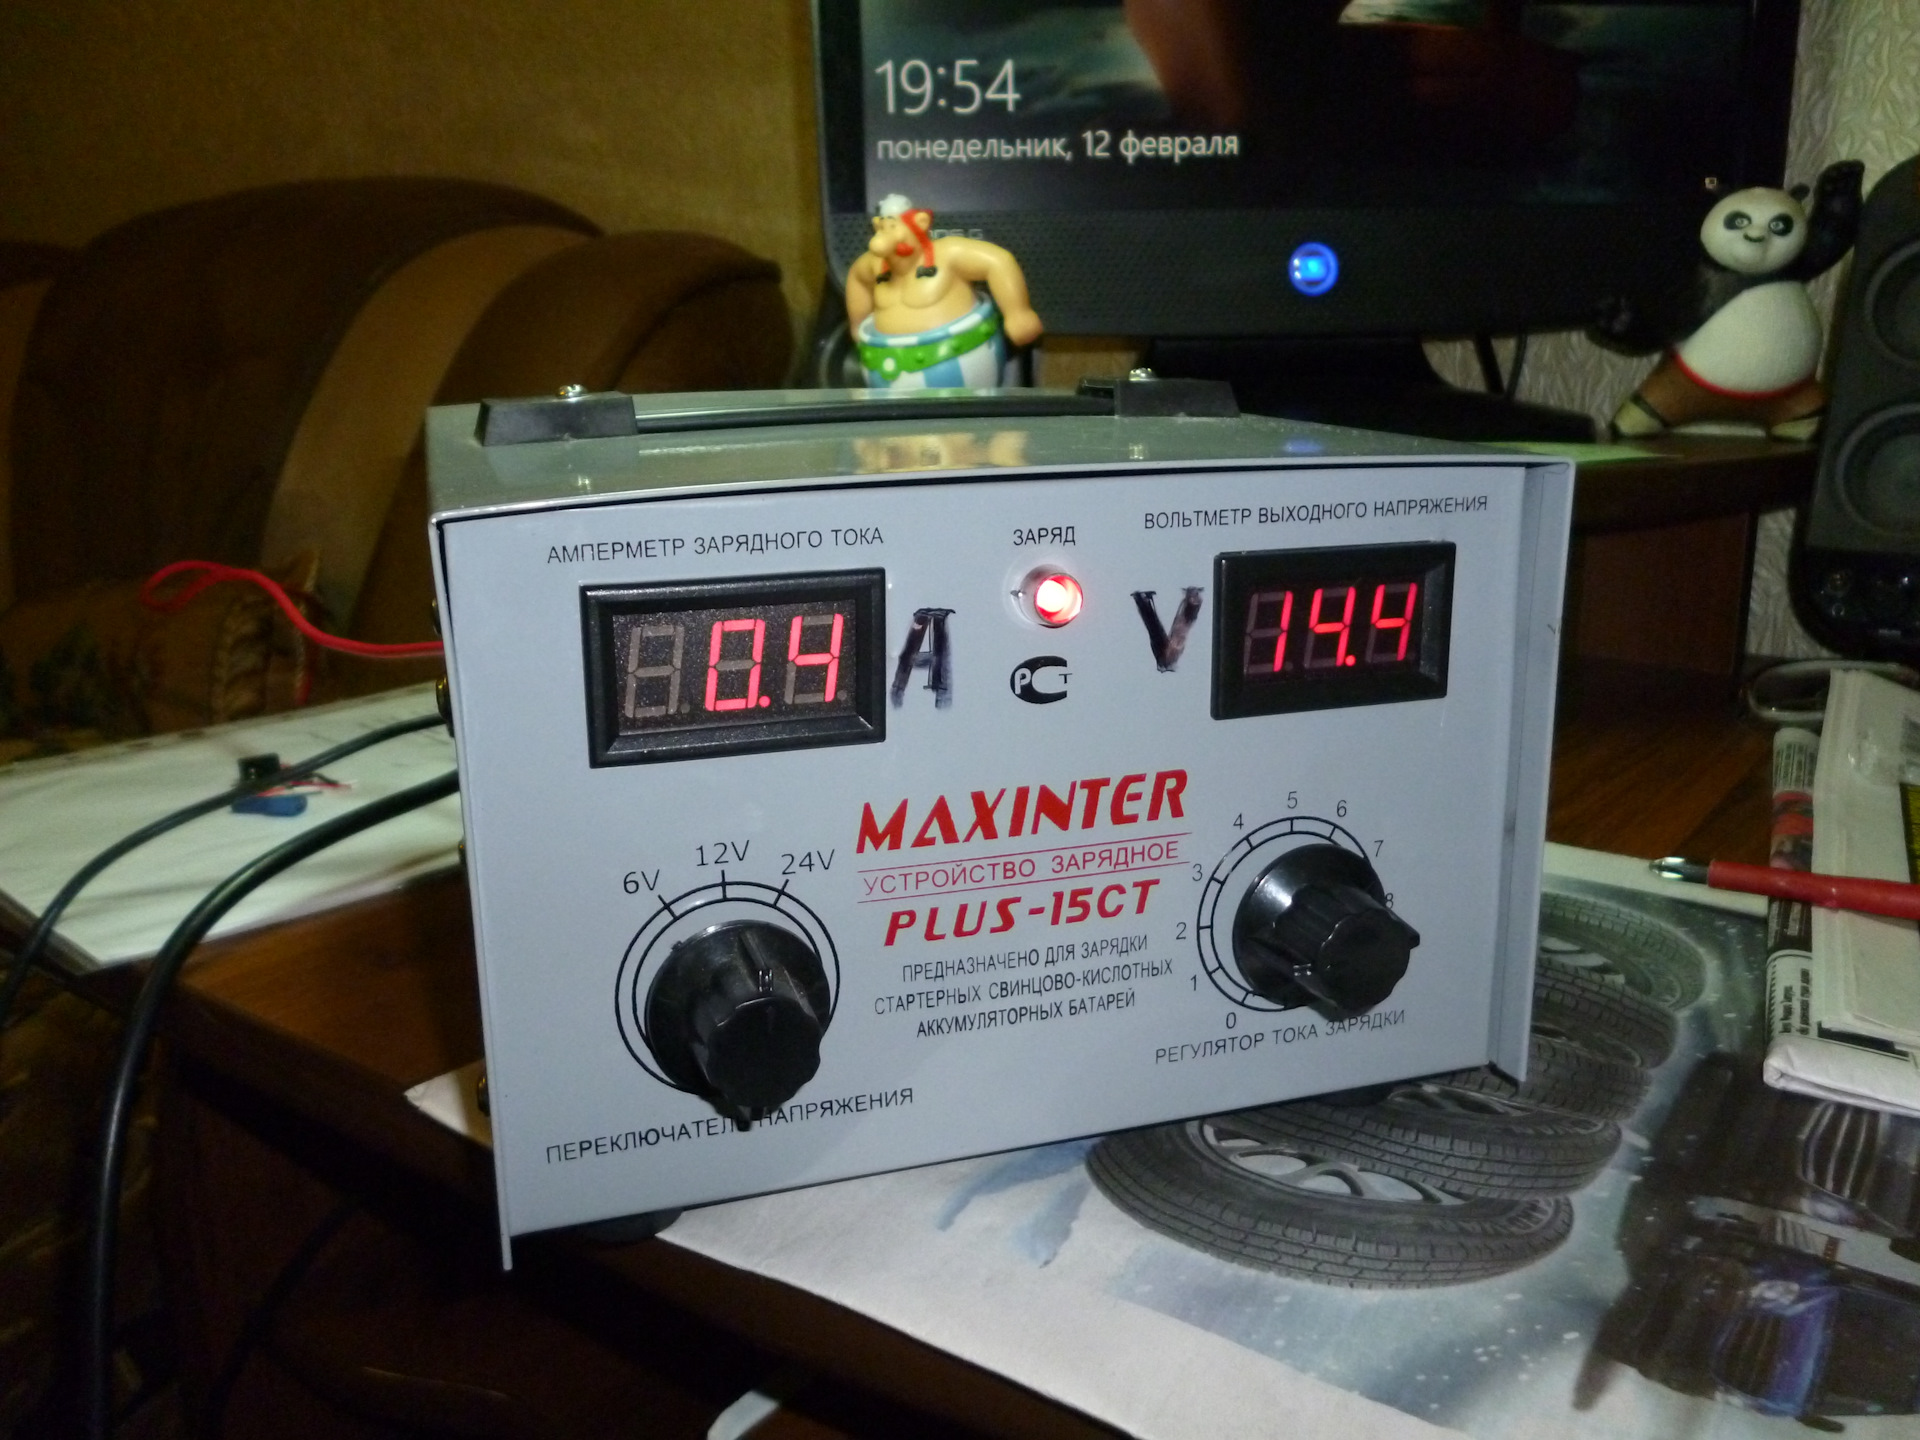 Максинтер зарядное. Зарядное устройство Maxinter Plus-15ат. Зарядное устройство Plus-15 CT (Universal) Maxinter (6шт). Зарядные Maxinter 15 CT. ЗУ Maxinter Plus 15.